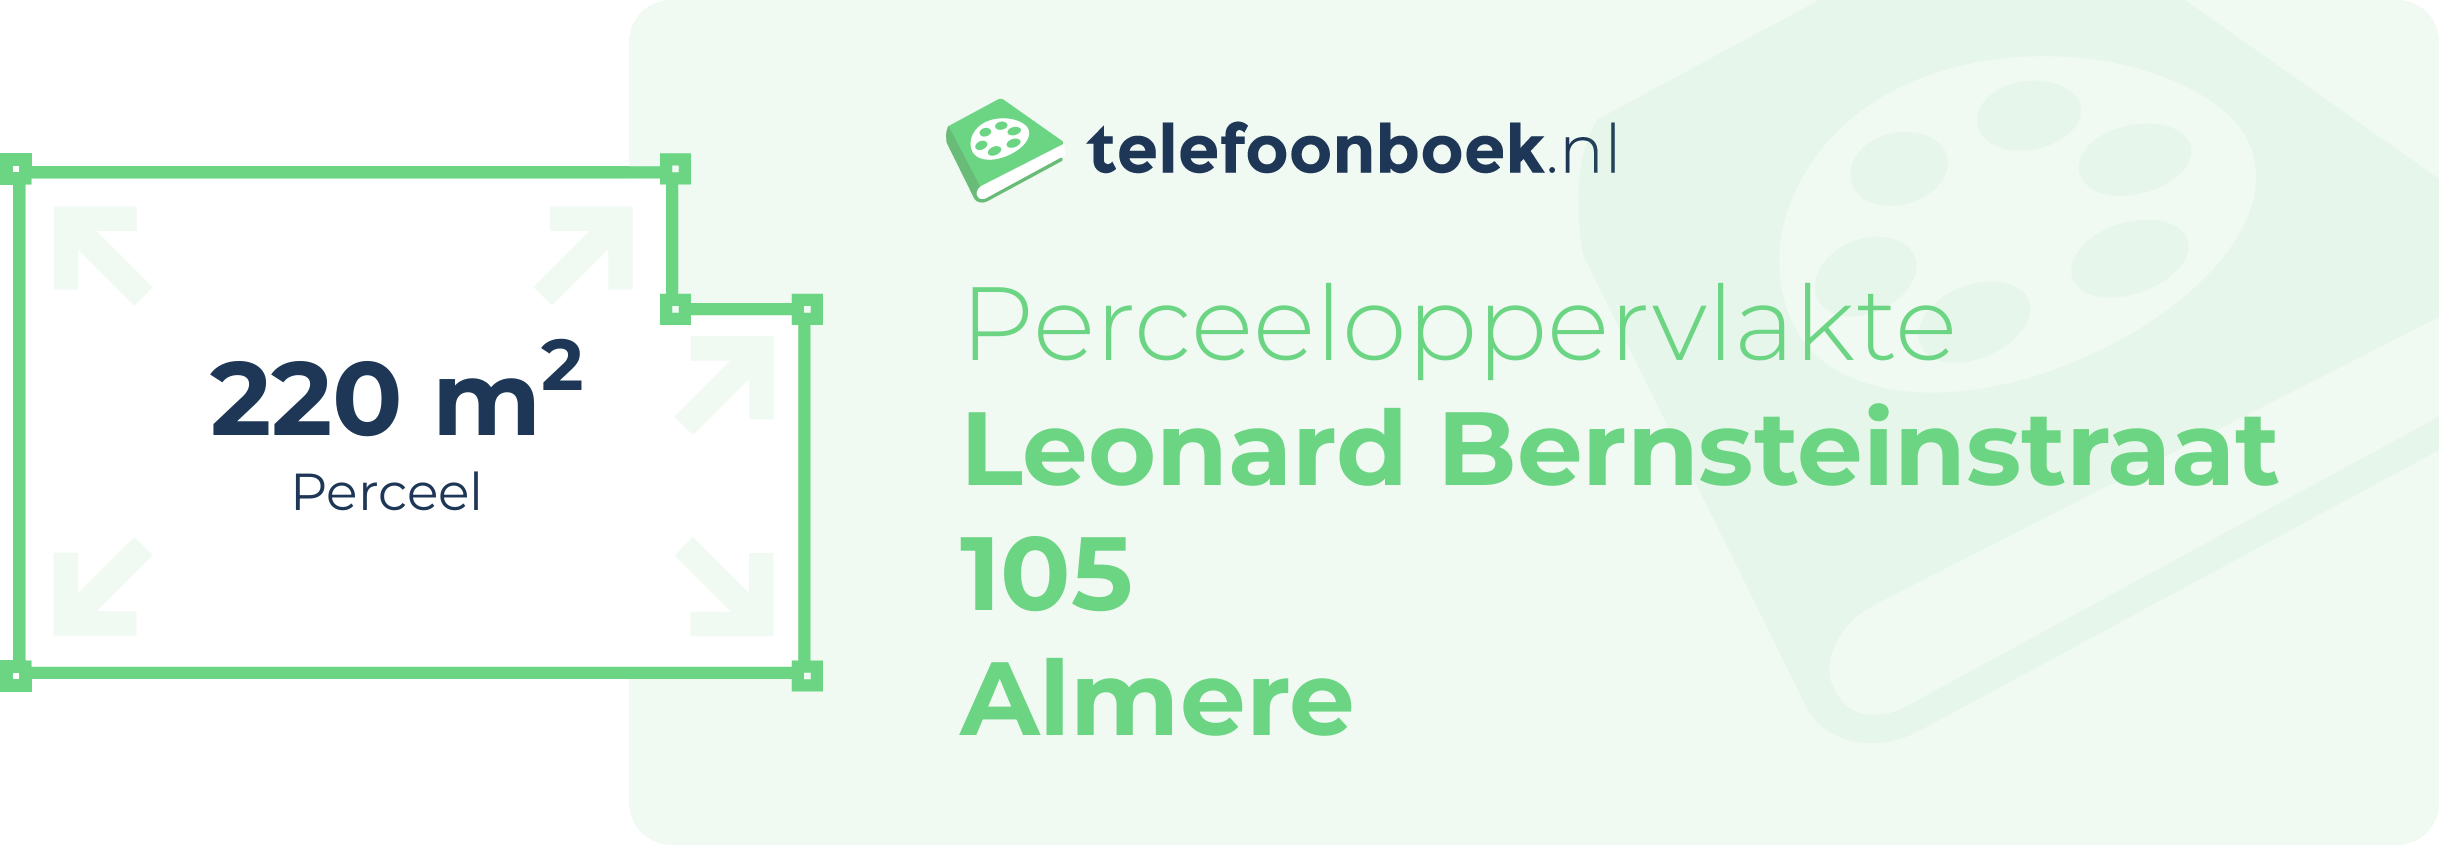 Perceeloppervlakte Leonard Bernsteinstraat 105 Almere